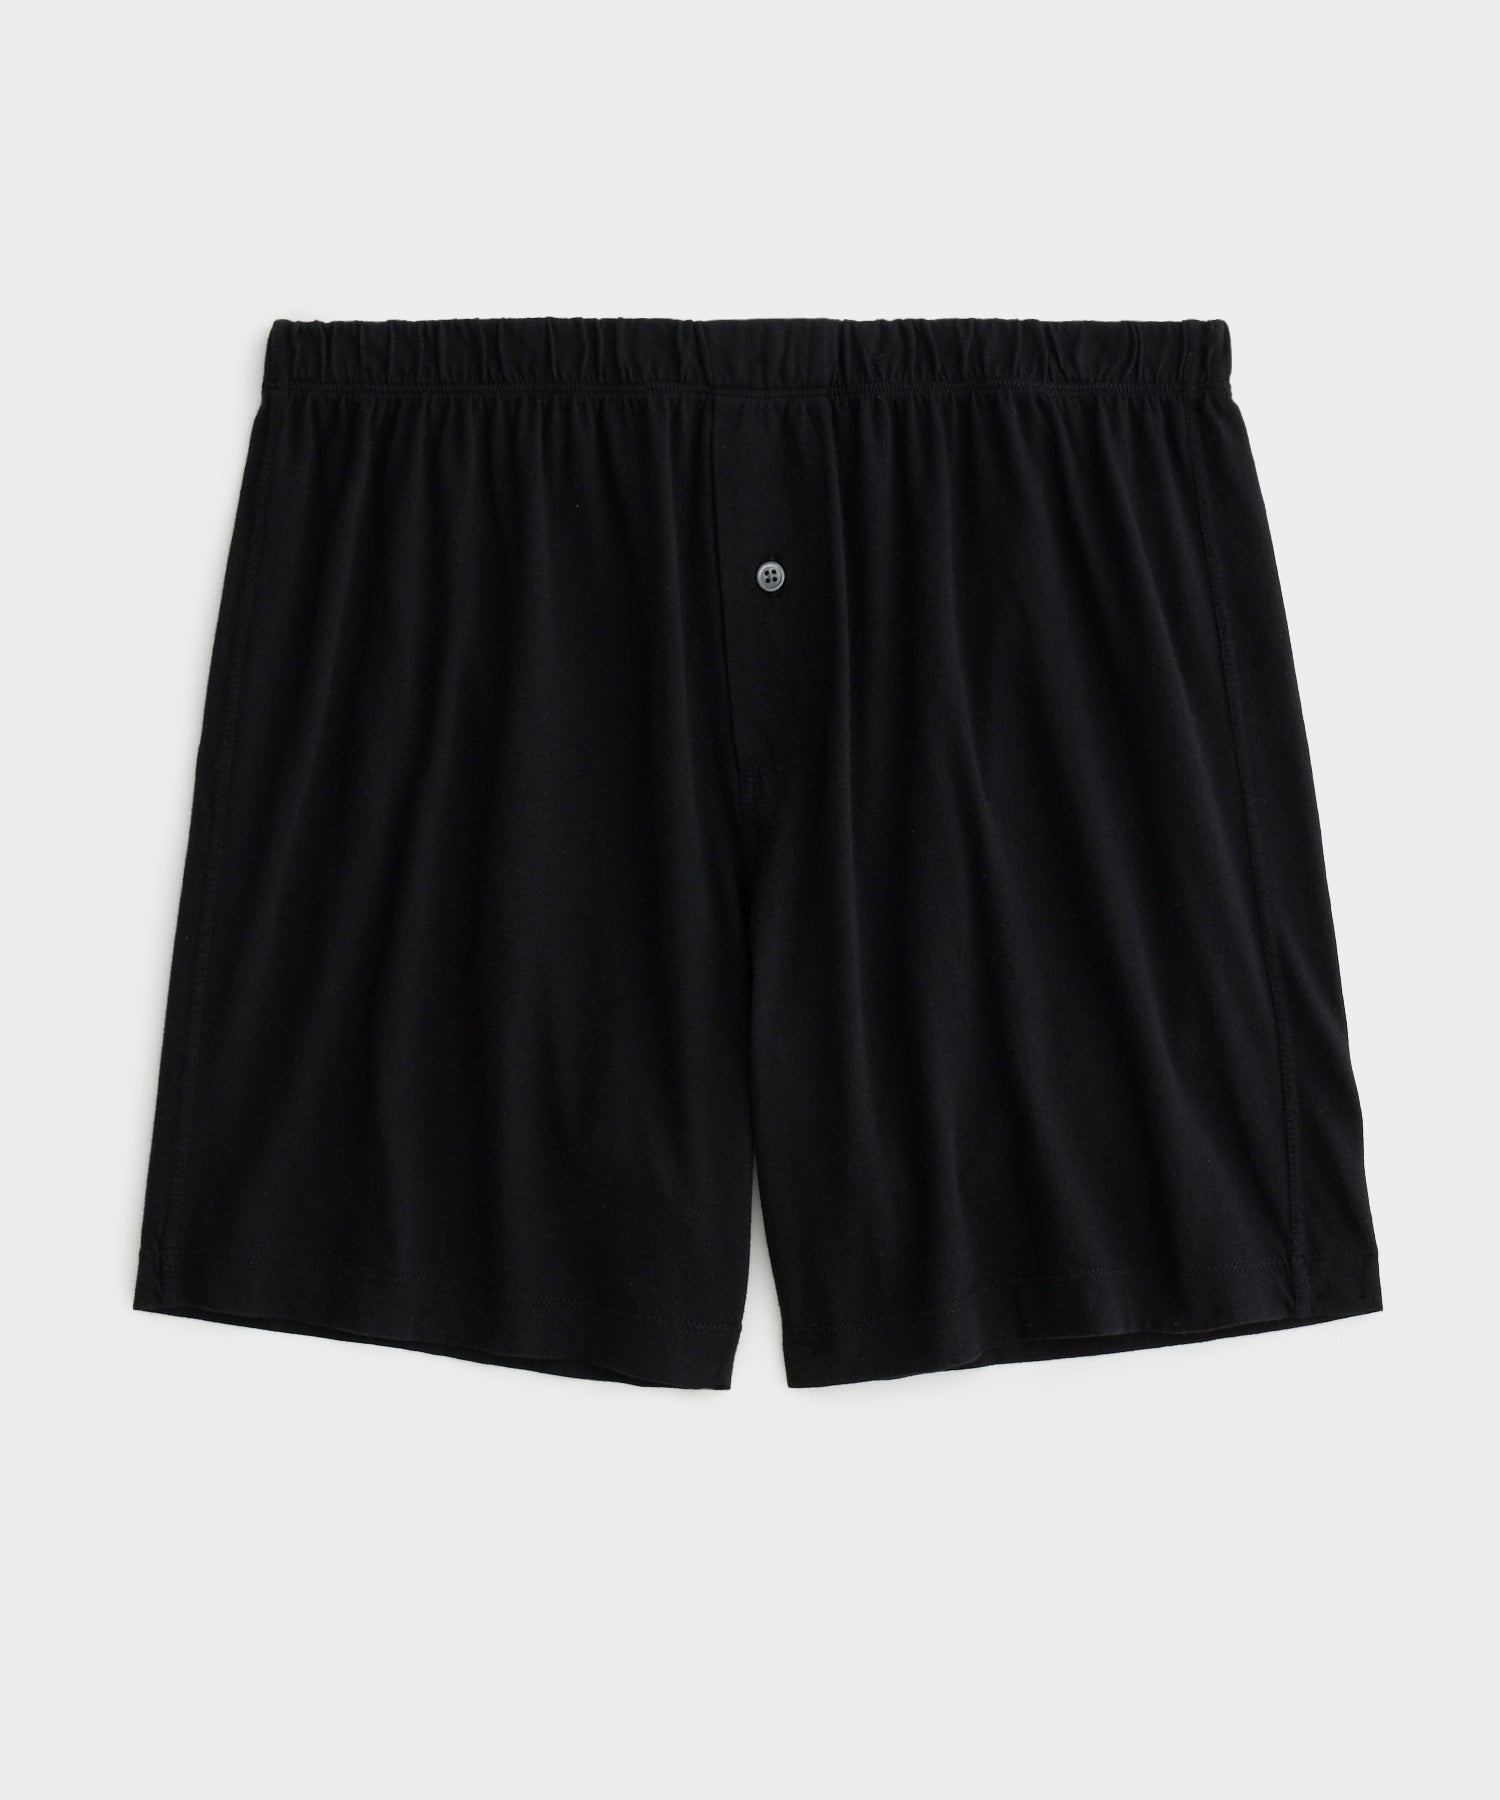 Premium Jersey Knit Boxer Short in Black